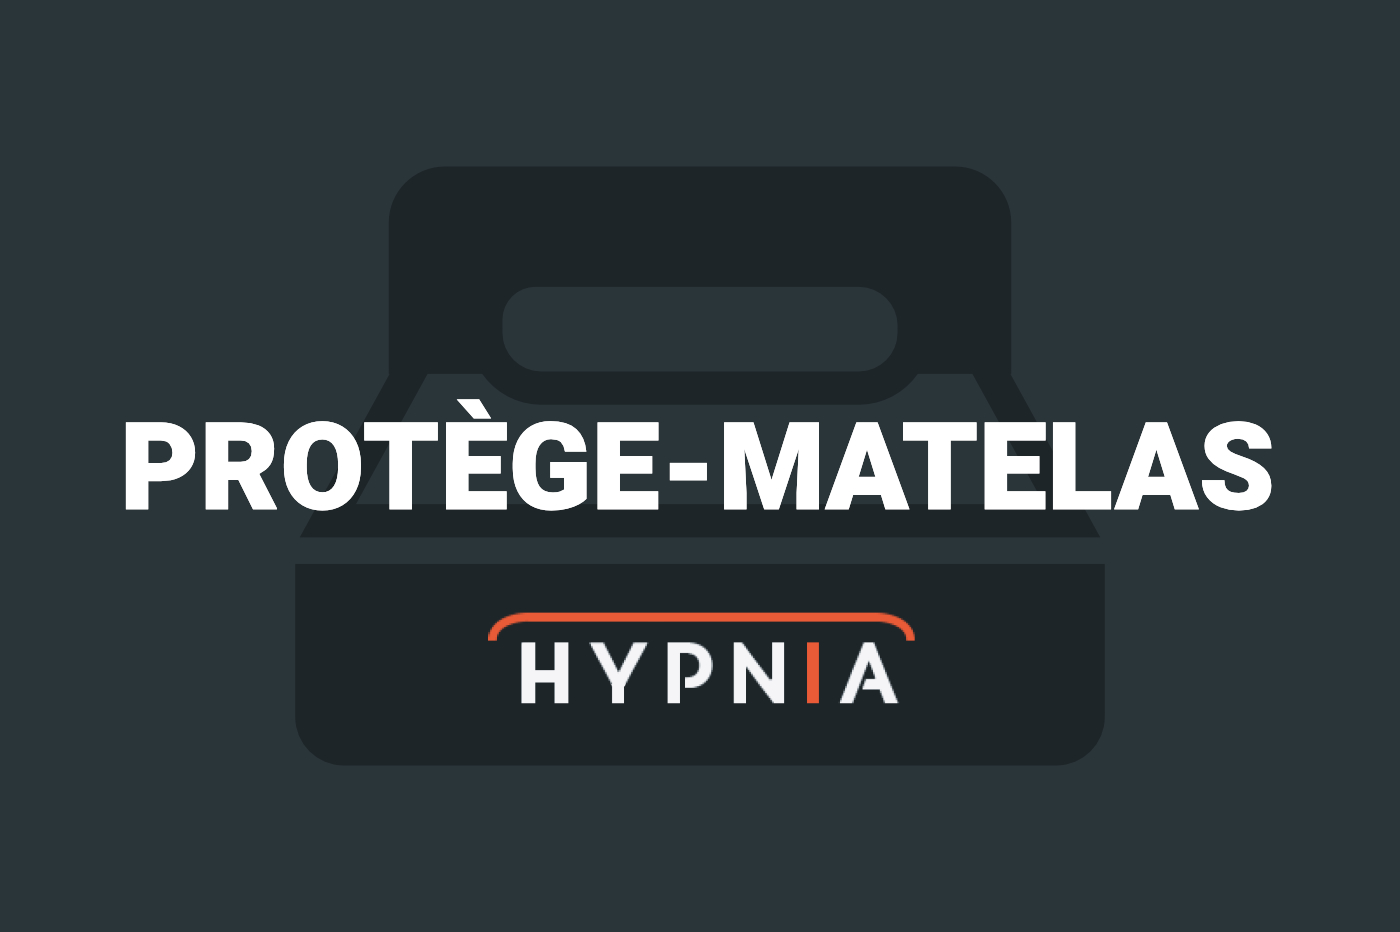 Protège-matelas Hypnia